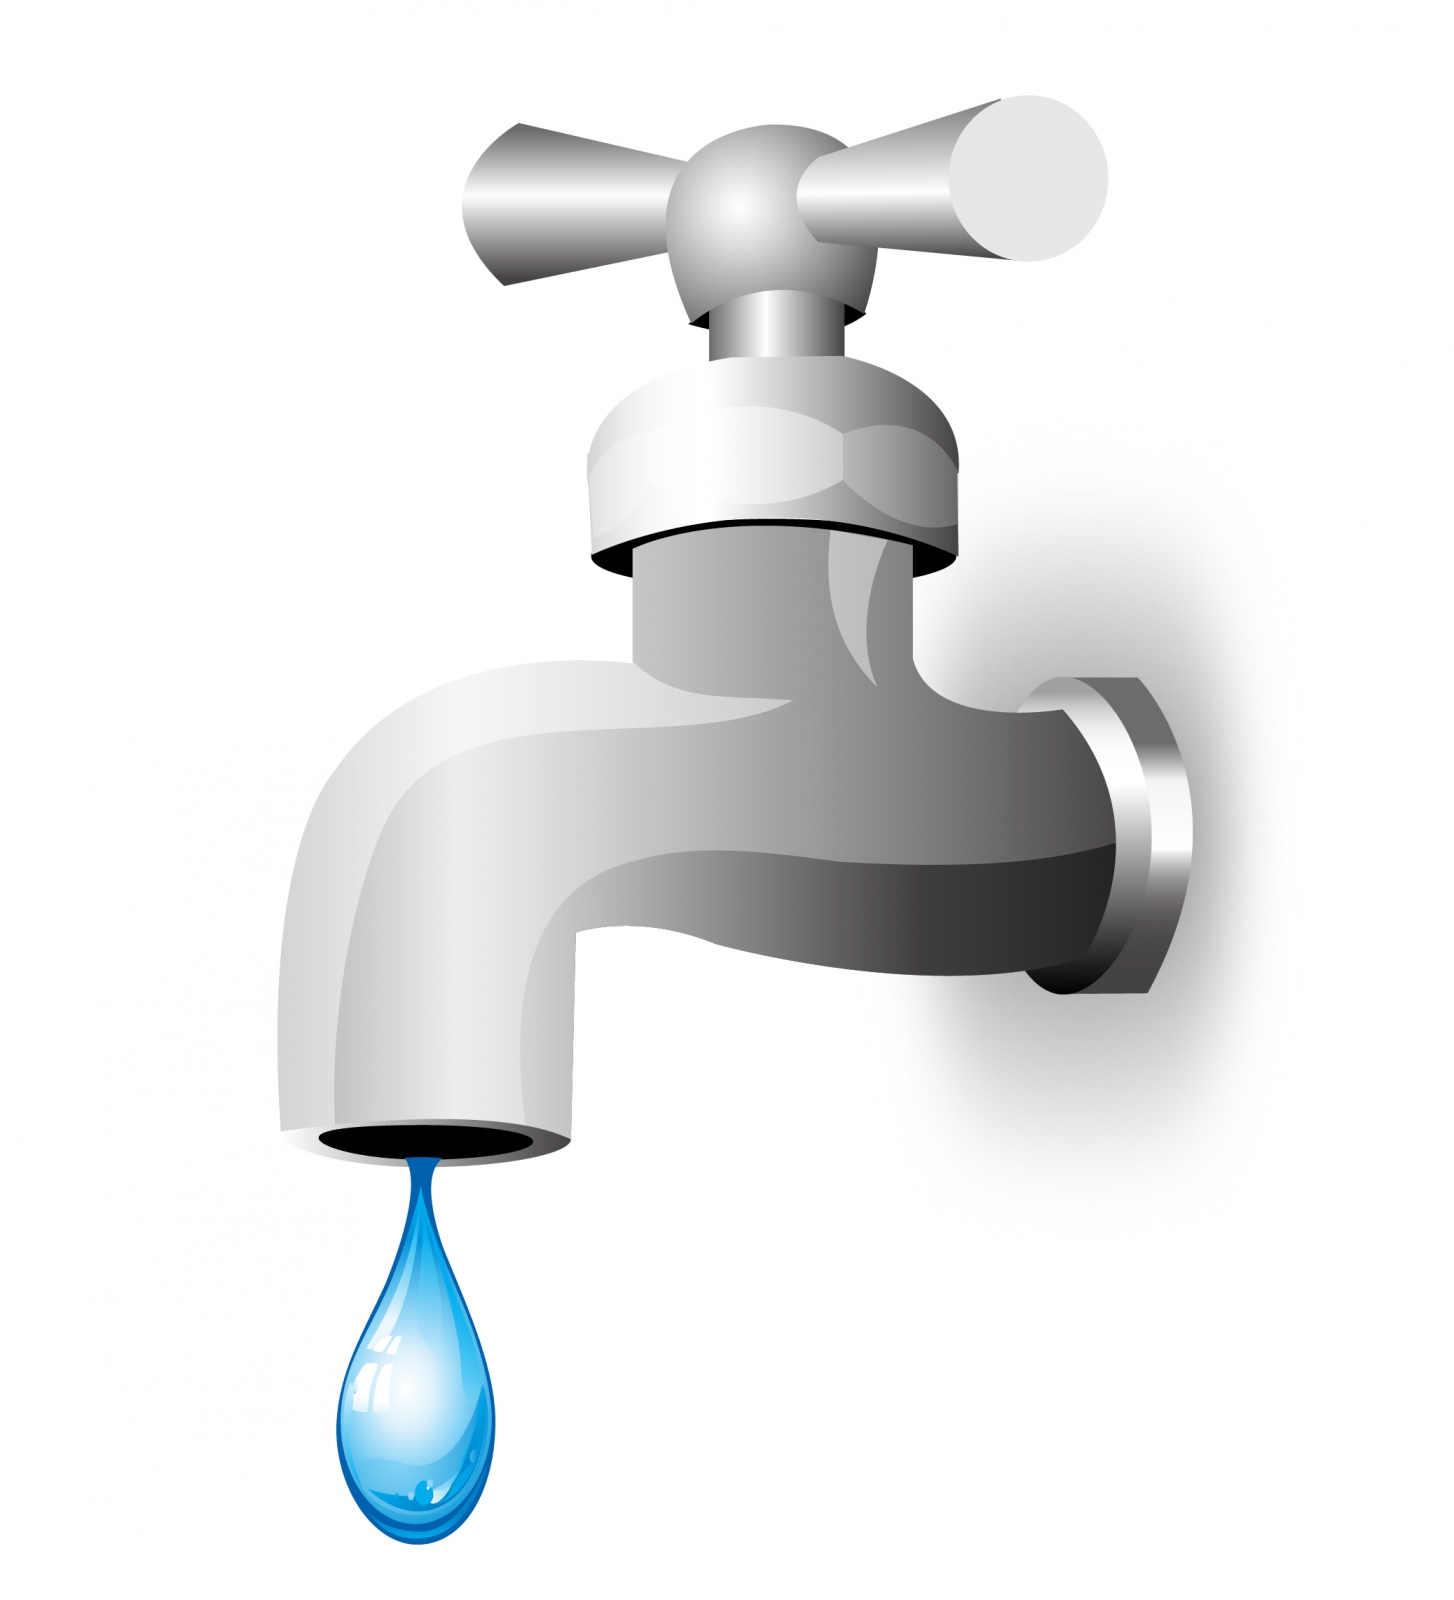 Free photo: Water tap, Screw, Sink